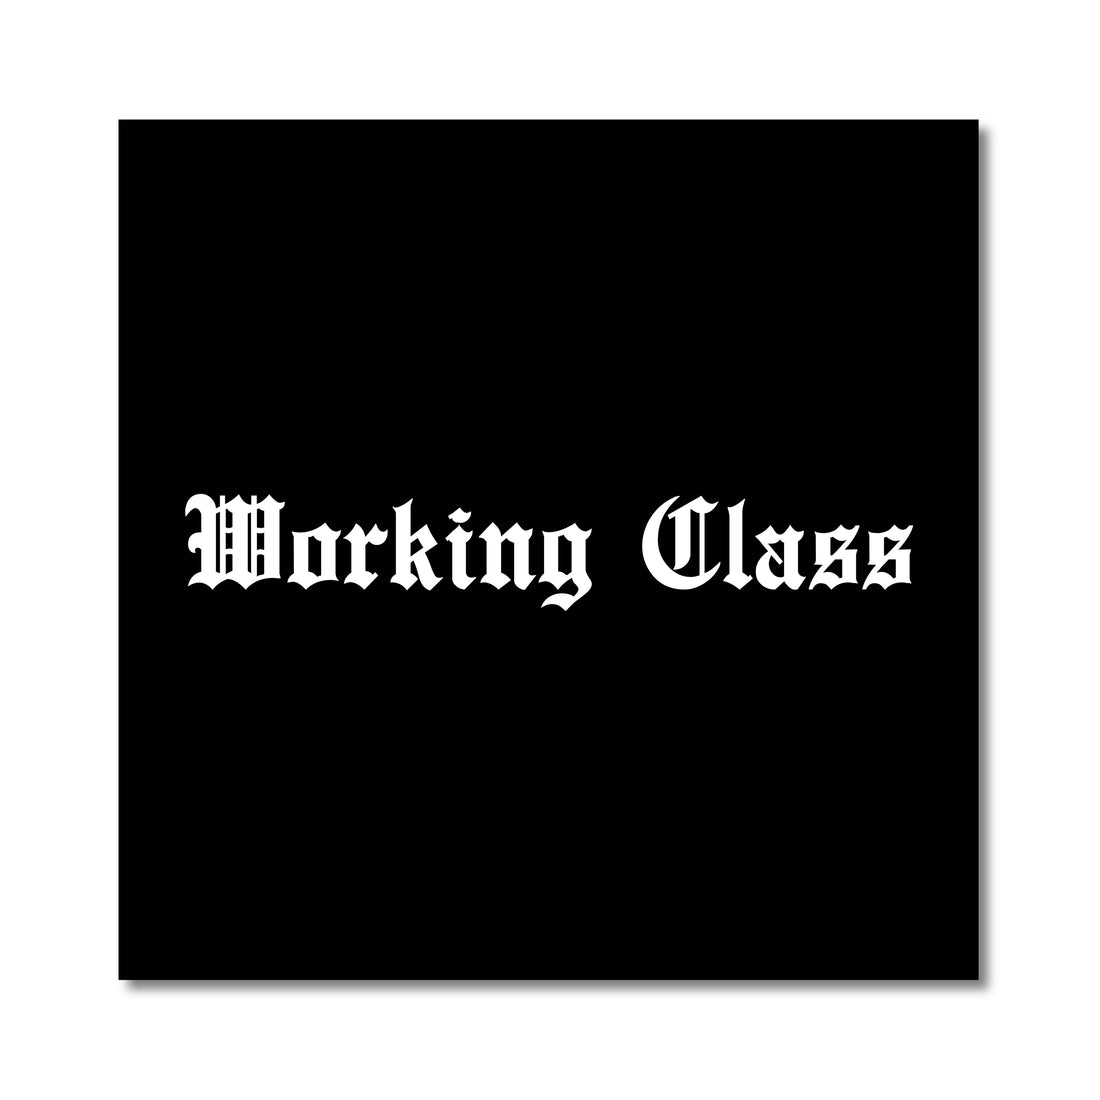 Working Class | T-Shirt | Black